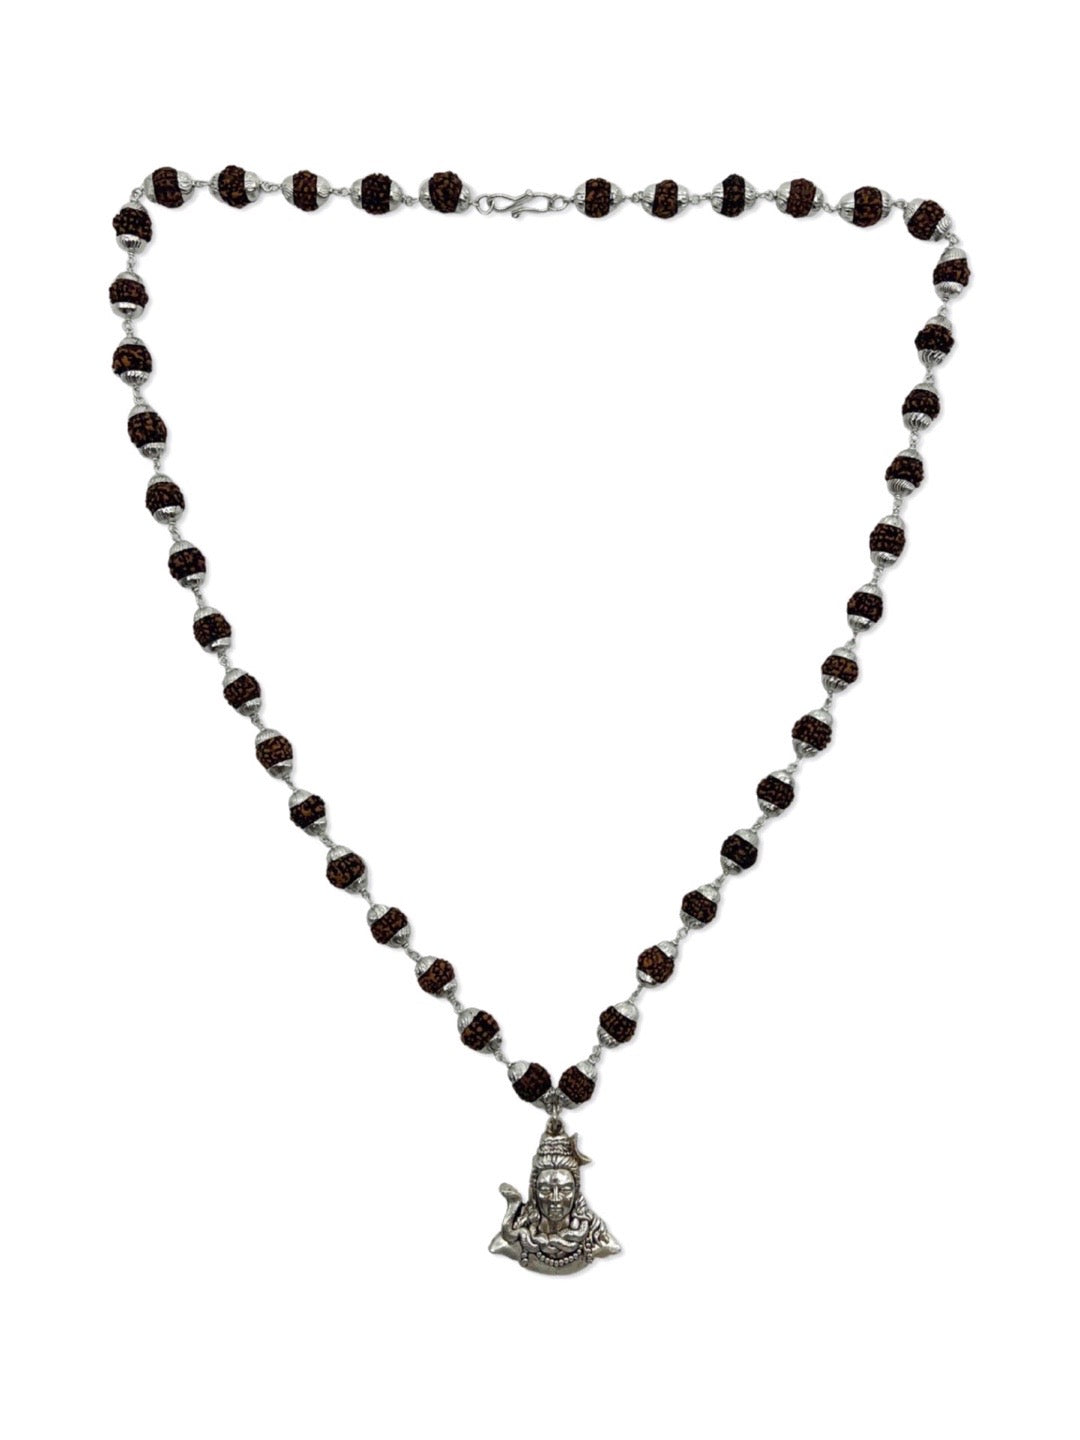 Lord Shiva Pendant Rudraksha Silver Chain